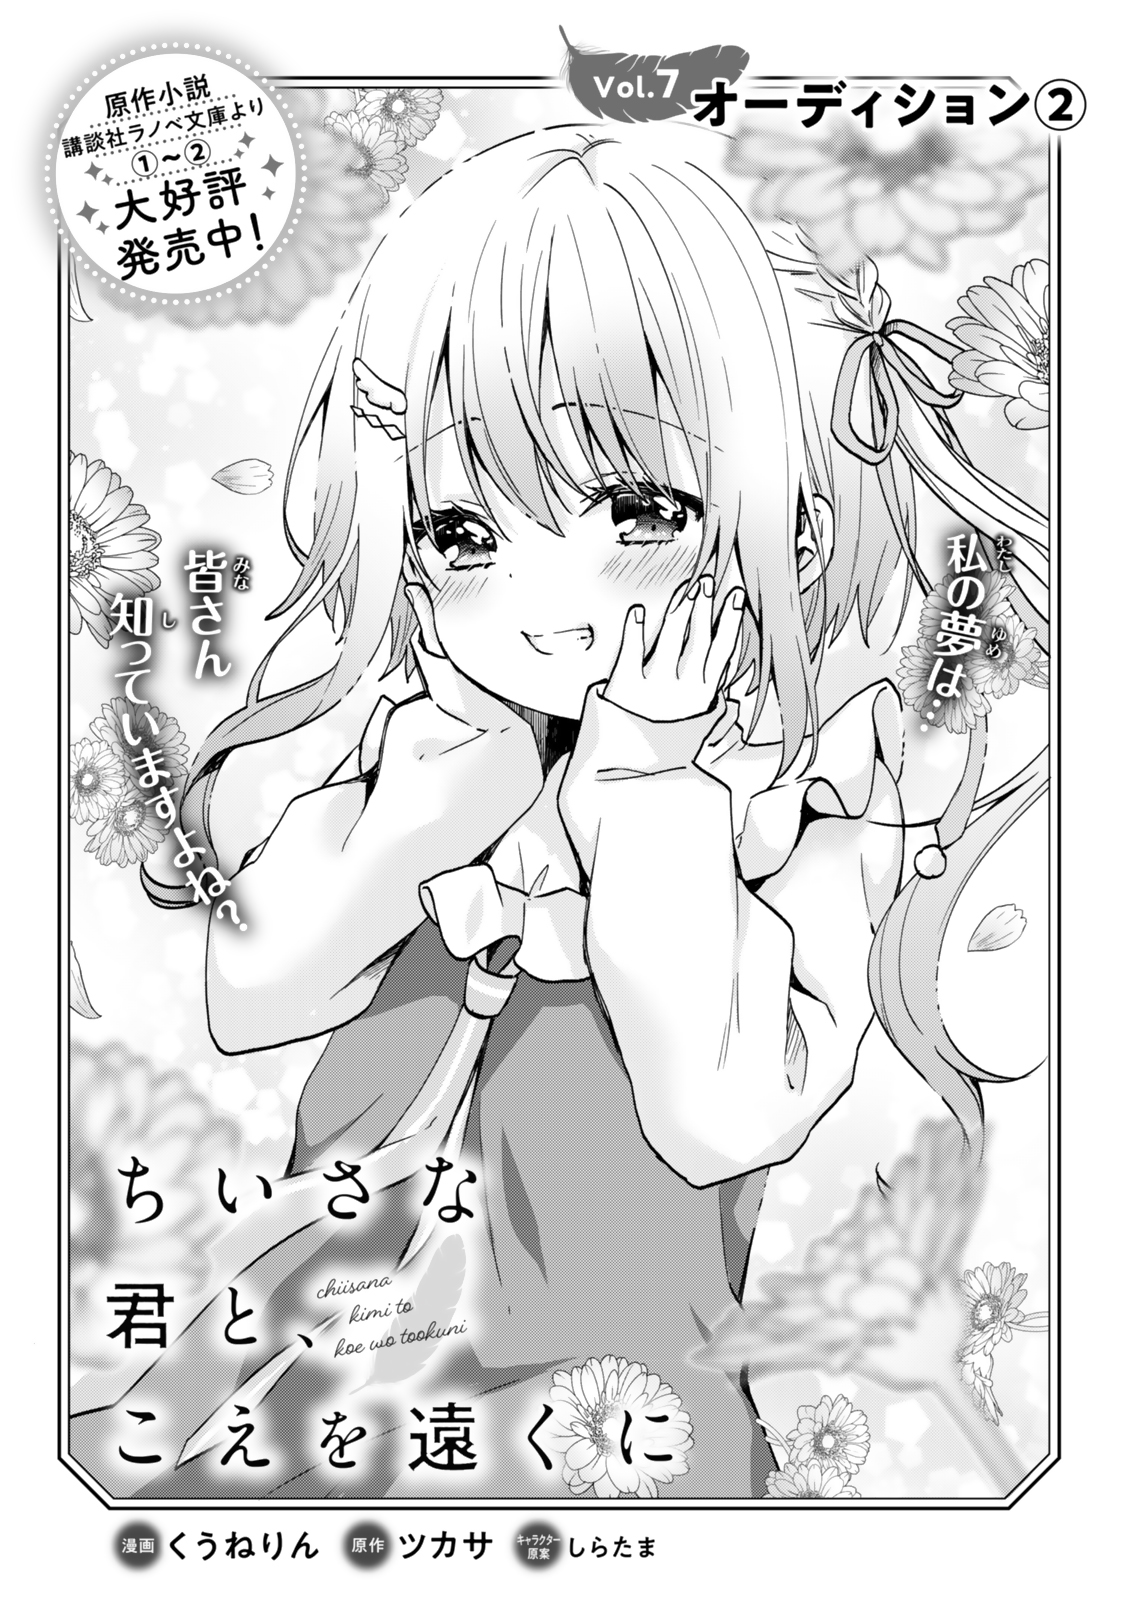 Chiisana Kimi to, Koe wo Tooku ni - Chapter 7 - Page 1